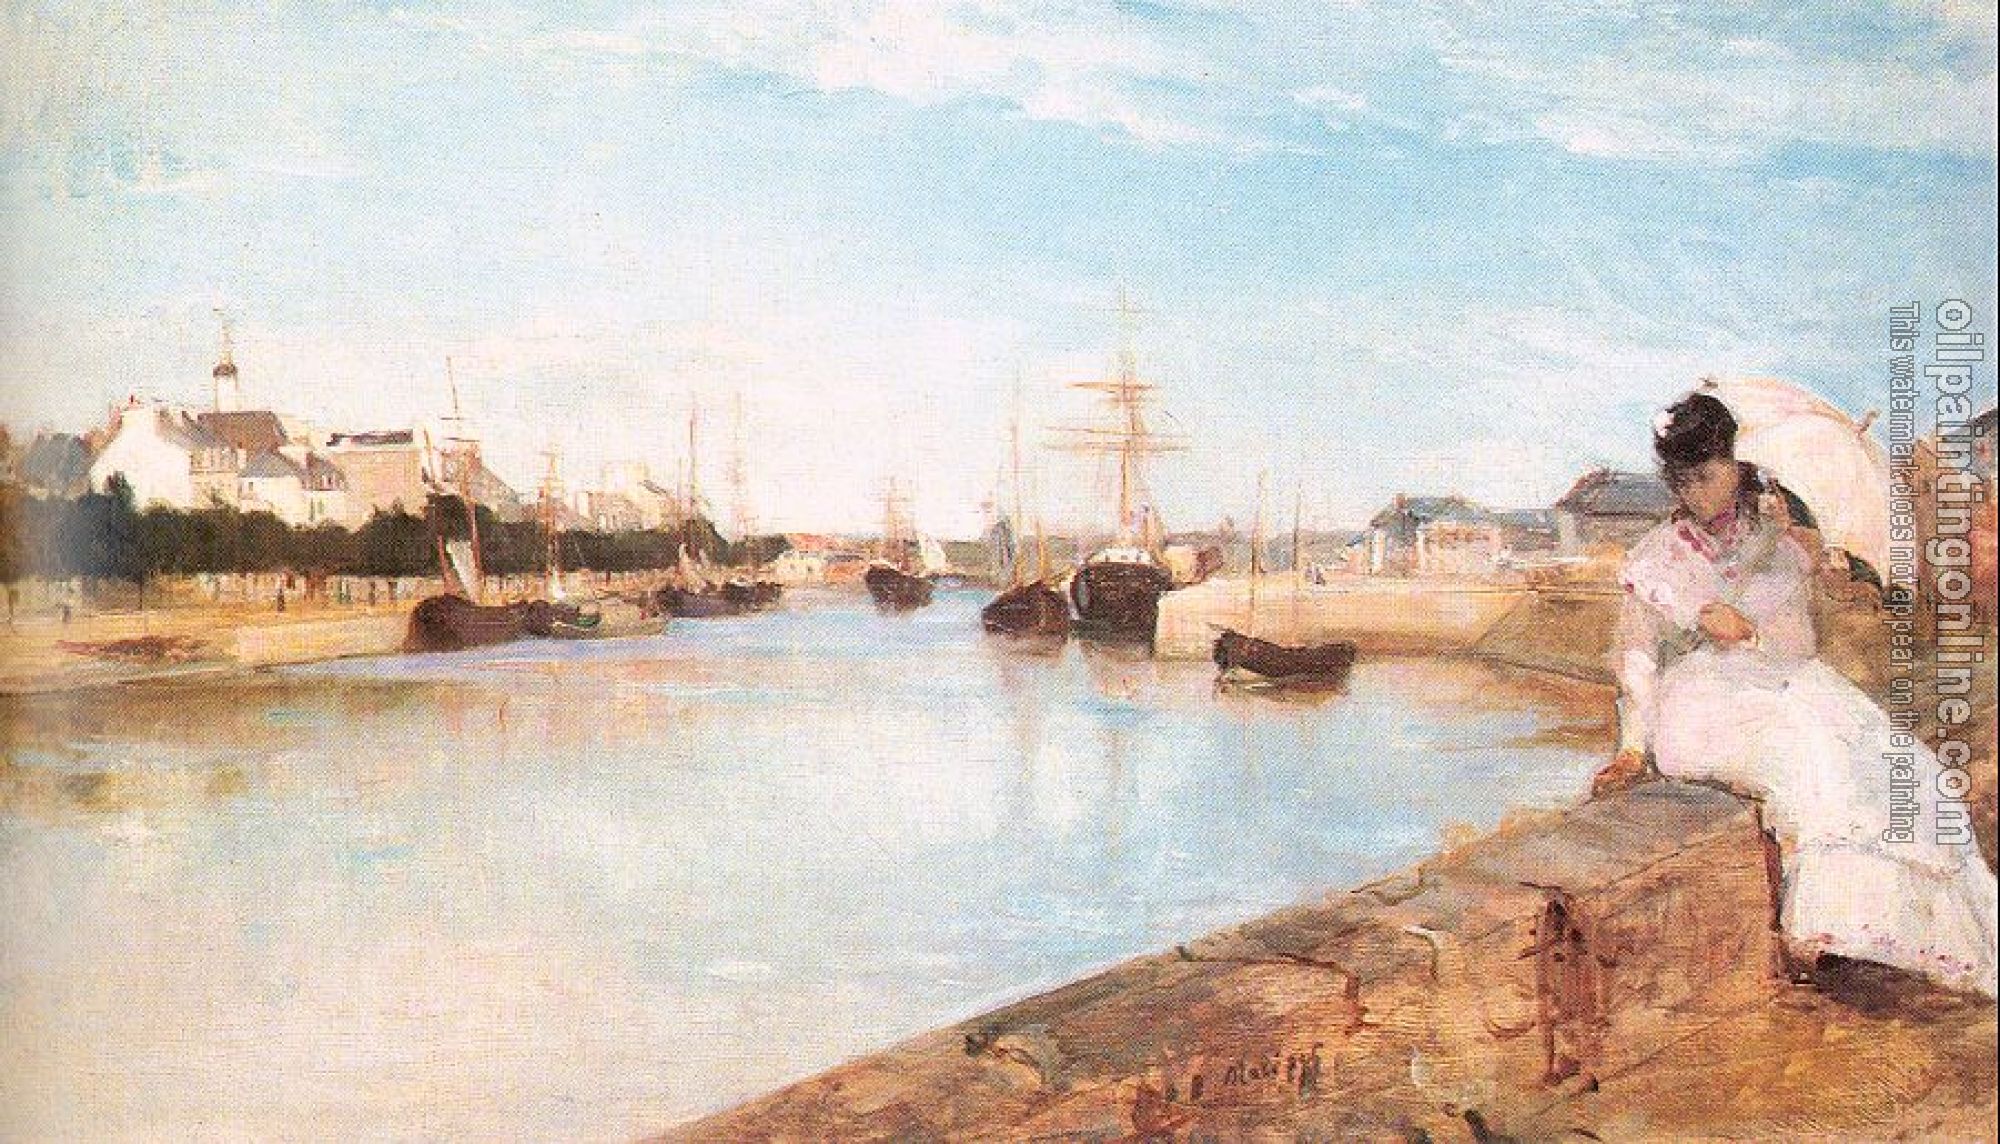 Morisot, Berthe - The Harbor at Lorient